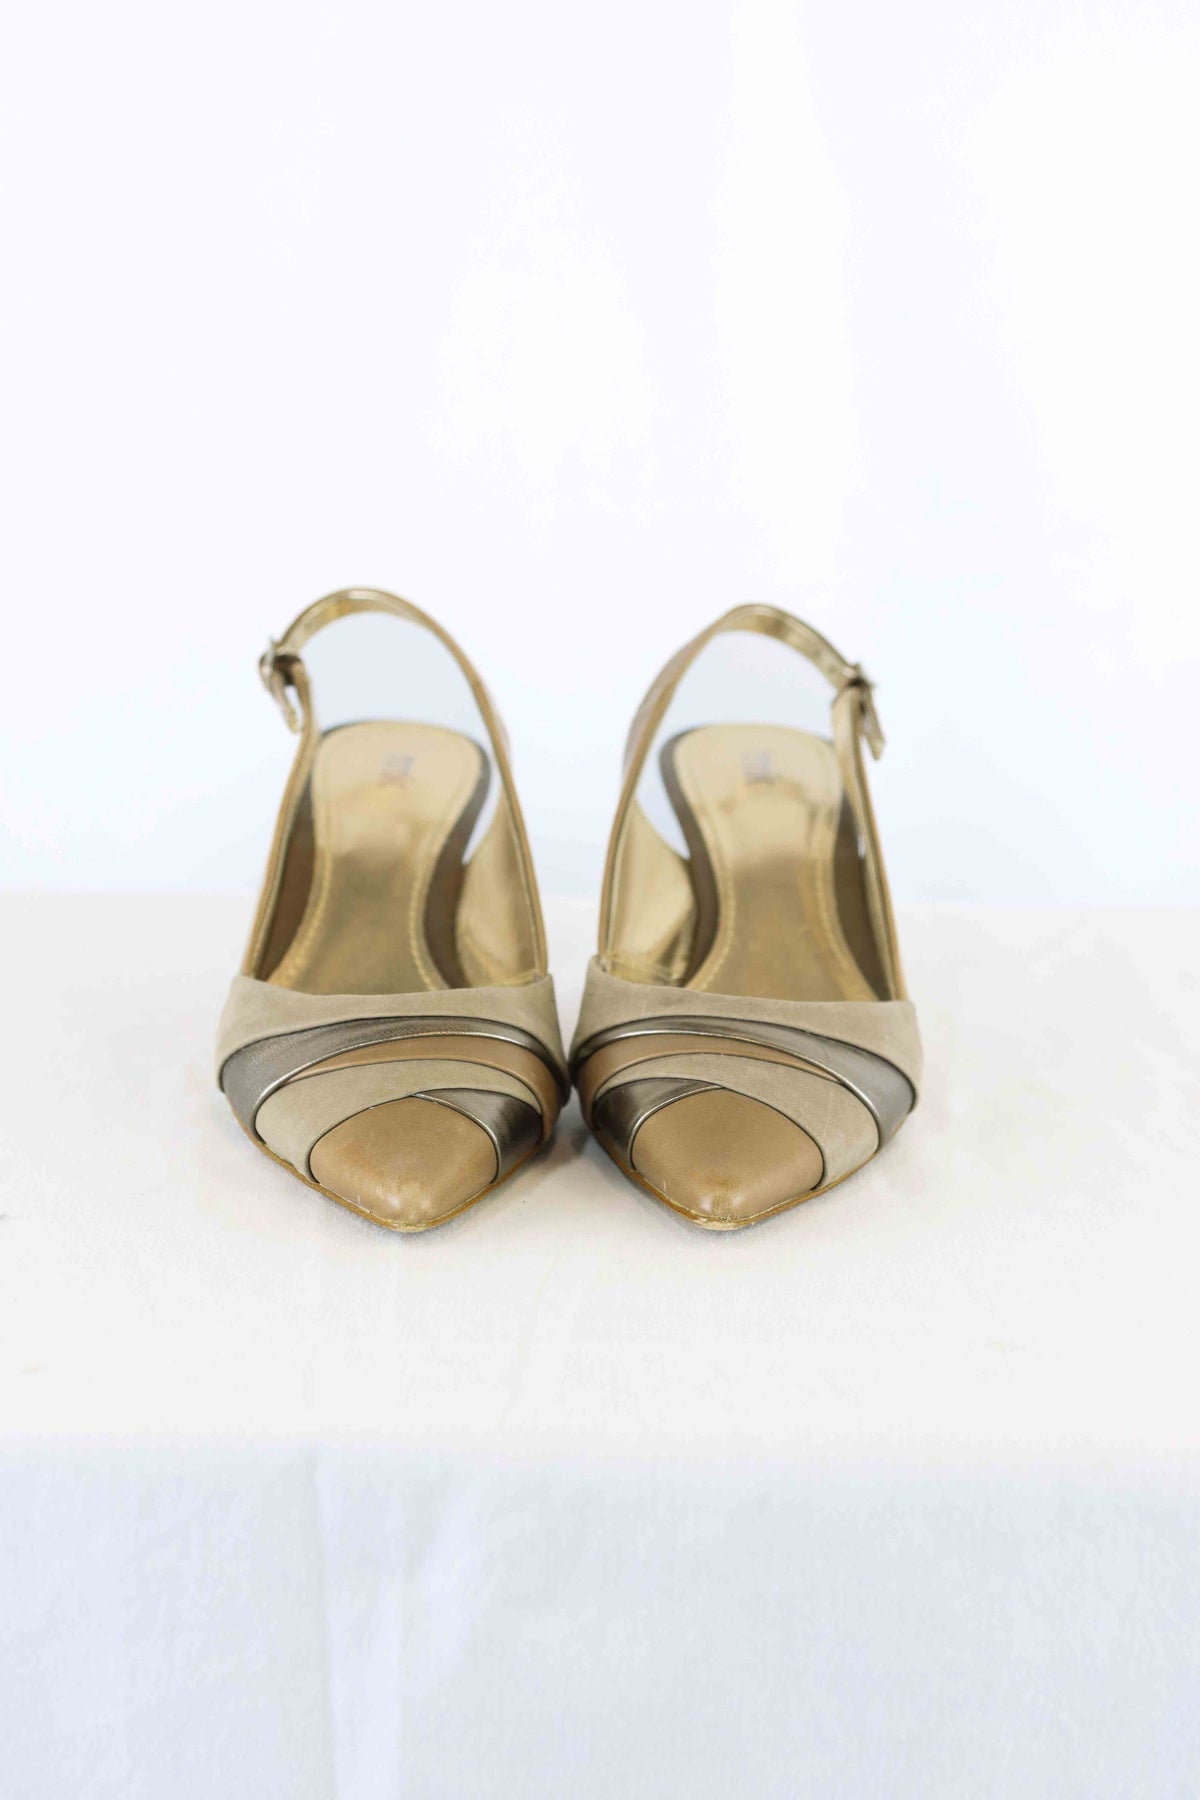 RMK Gold Heels 6.5